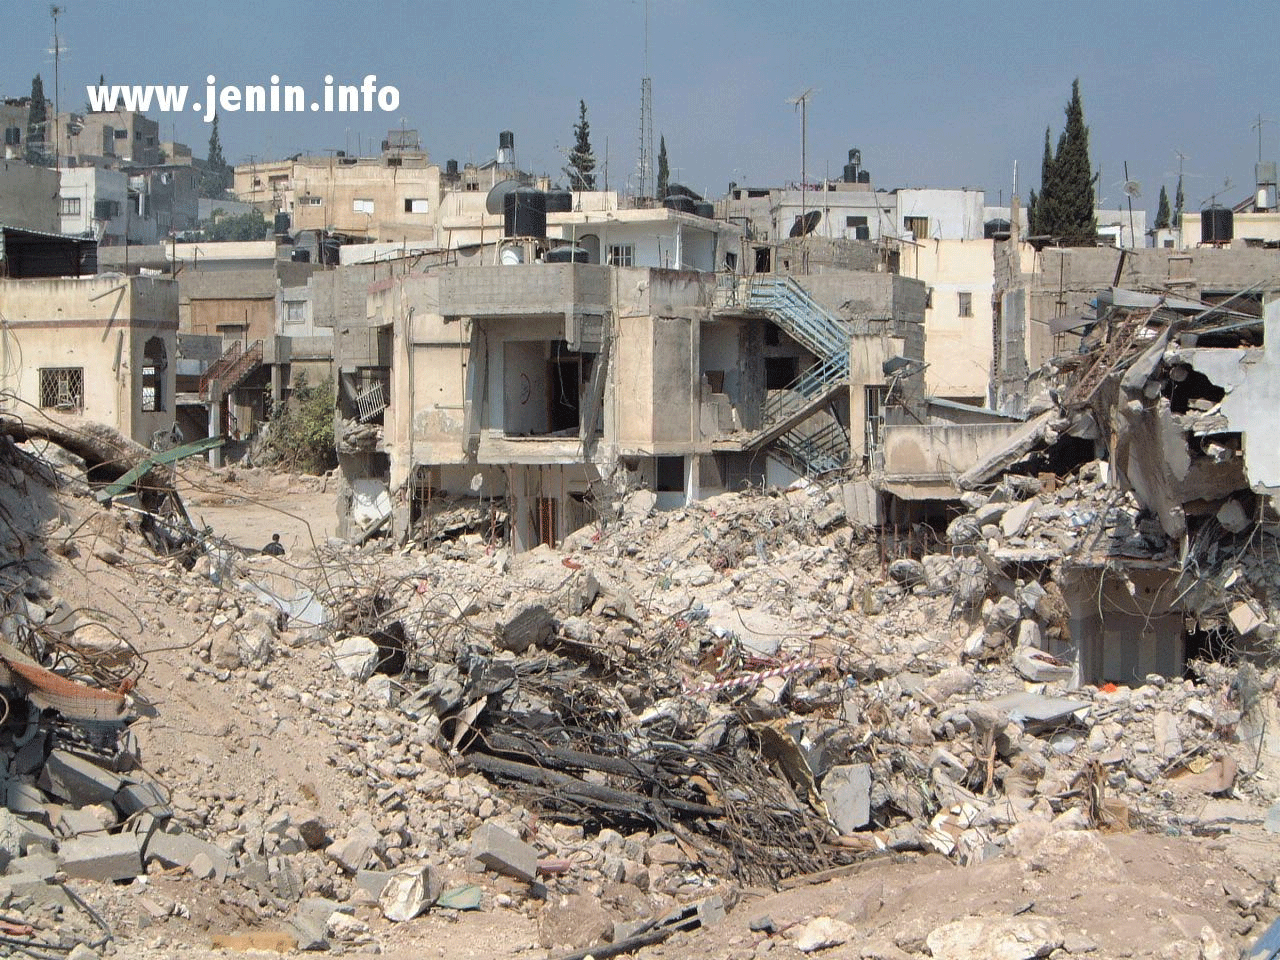 Destruction in the middle of Jenin Refugee Camp.